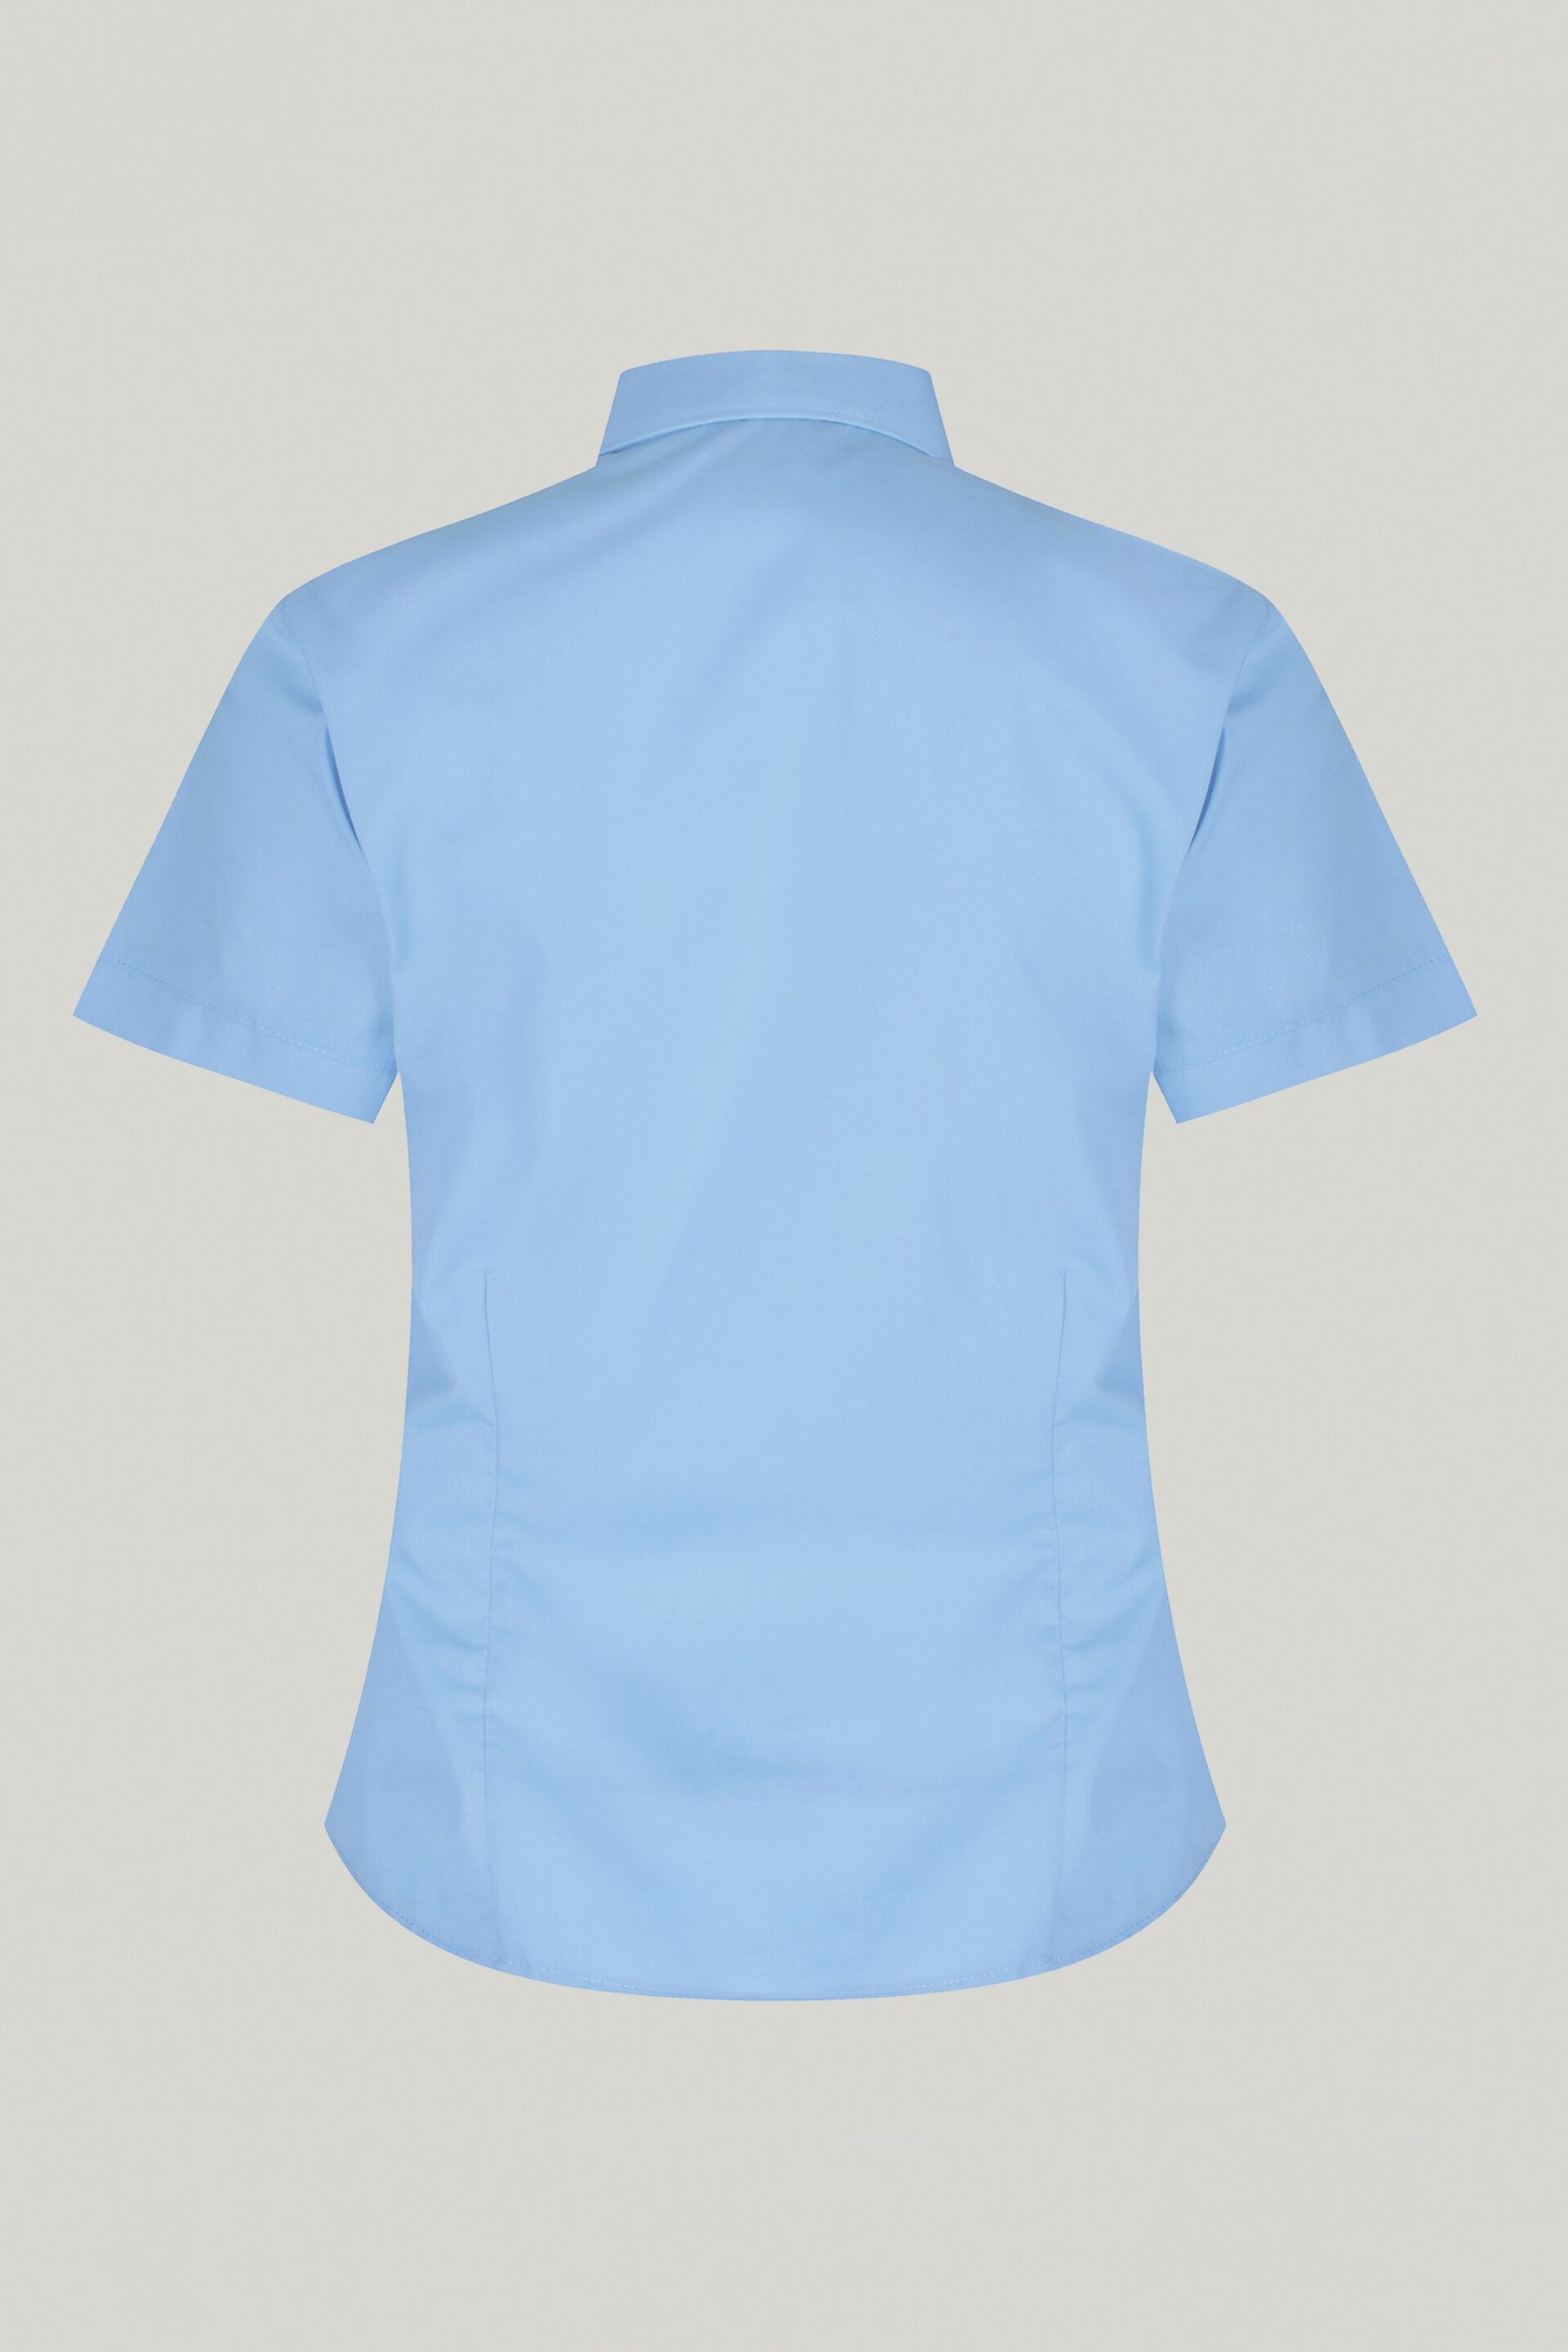 Trutex Blue Slim Fit Short Sleeve 2 Pack School Shirts - Image 6 of 6